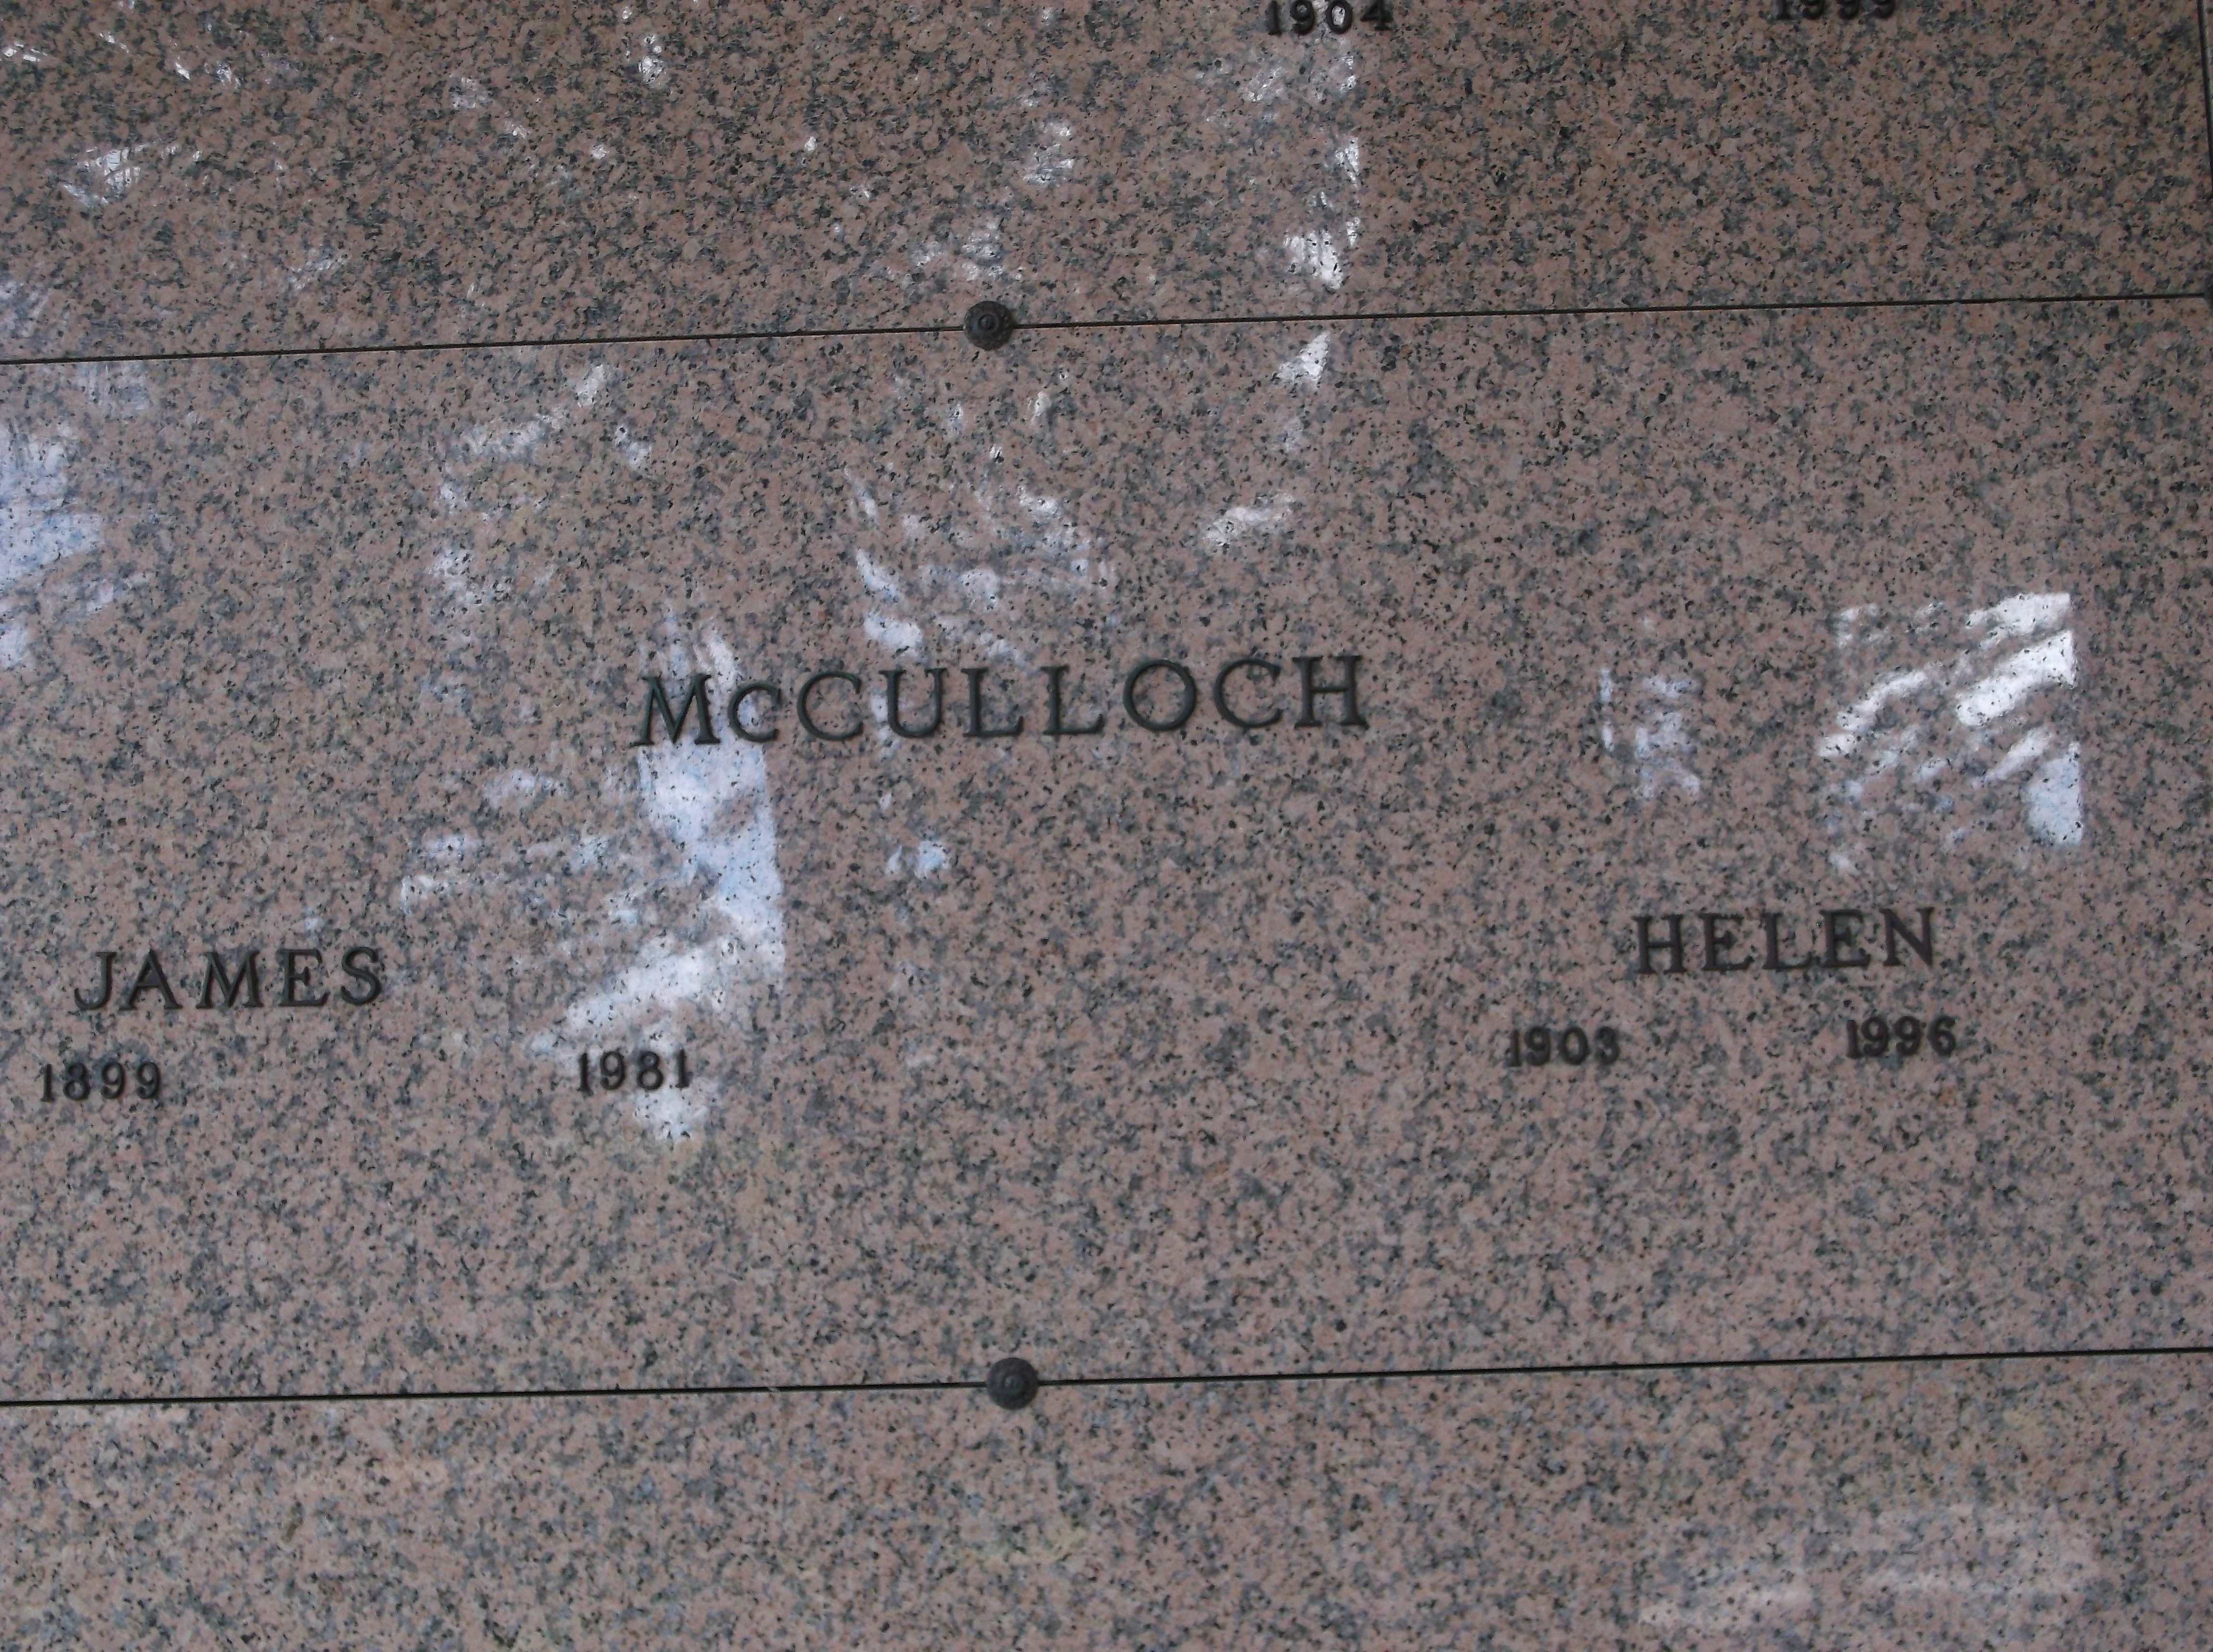 James McCulloch